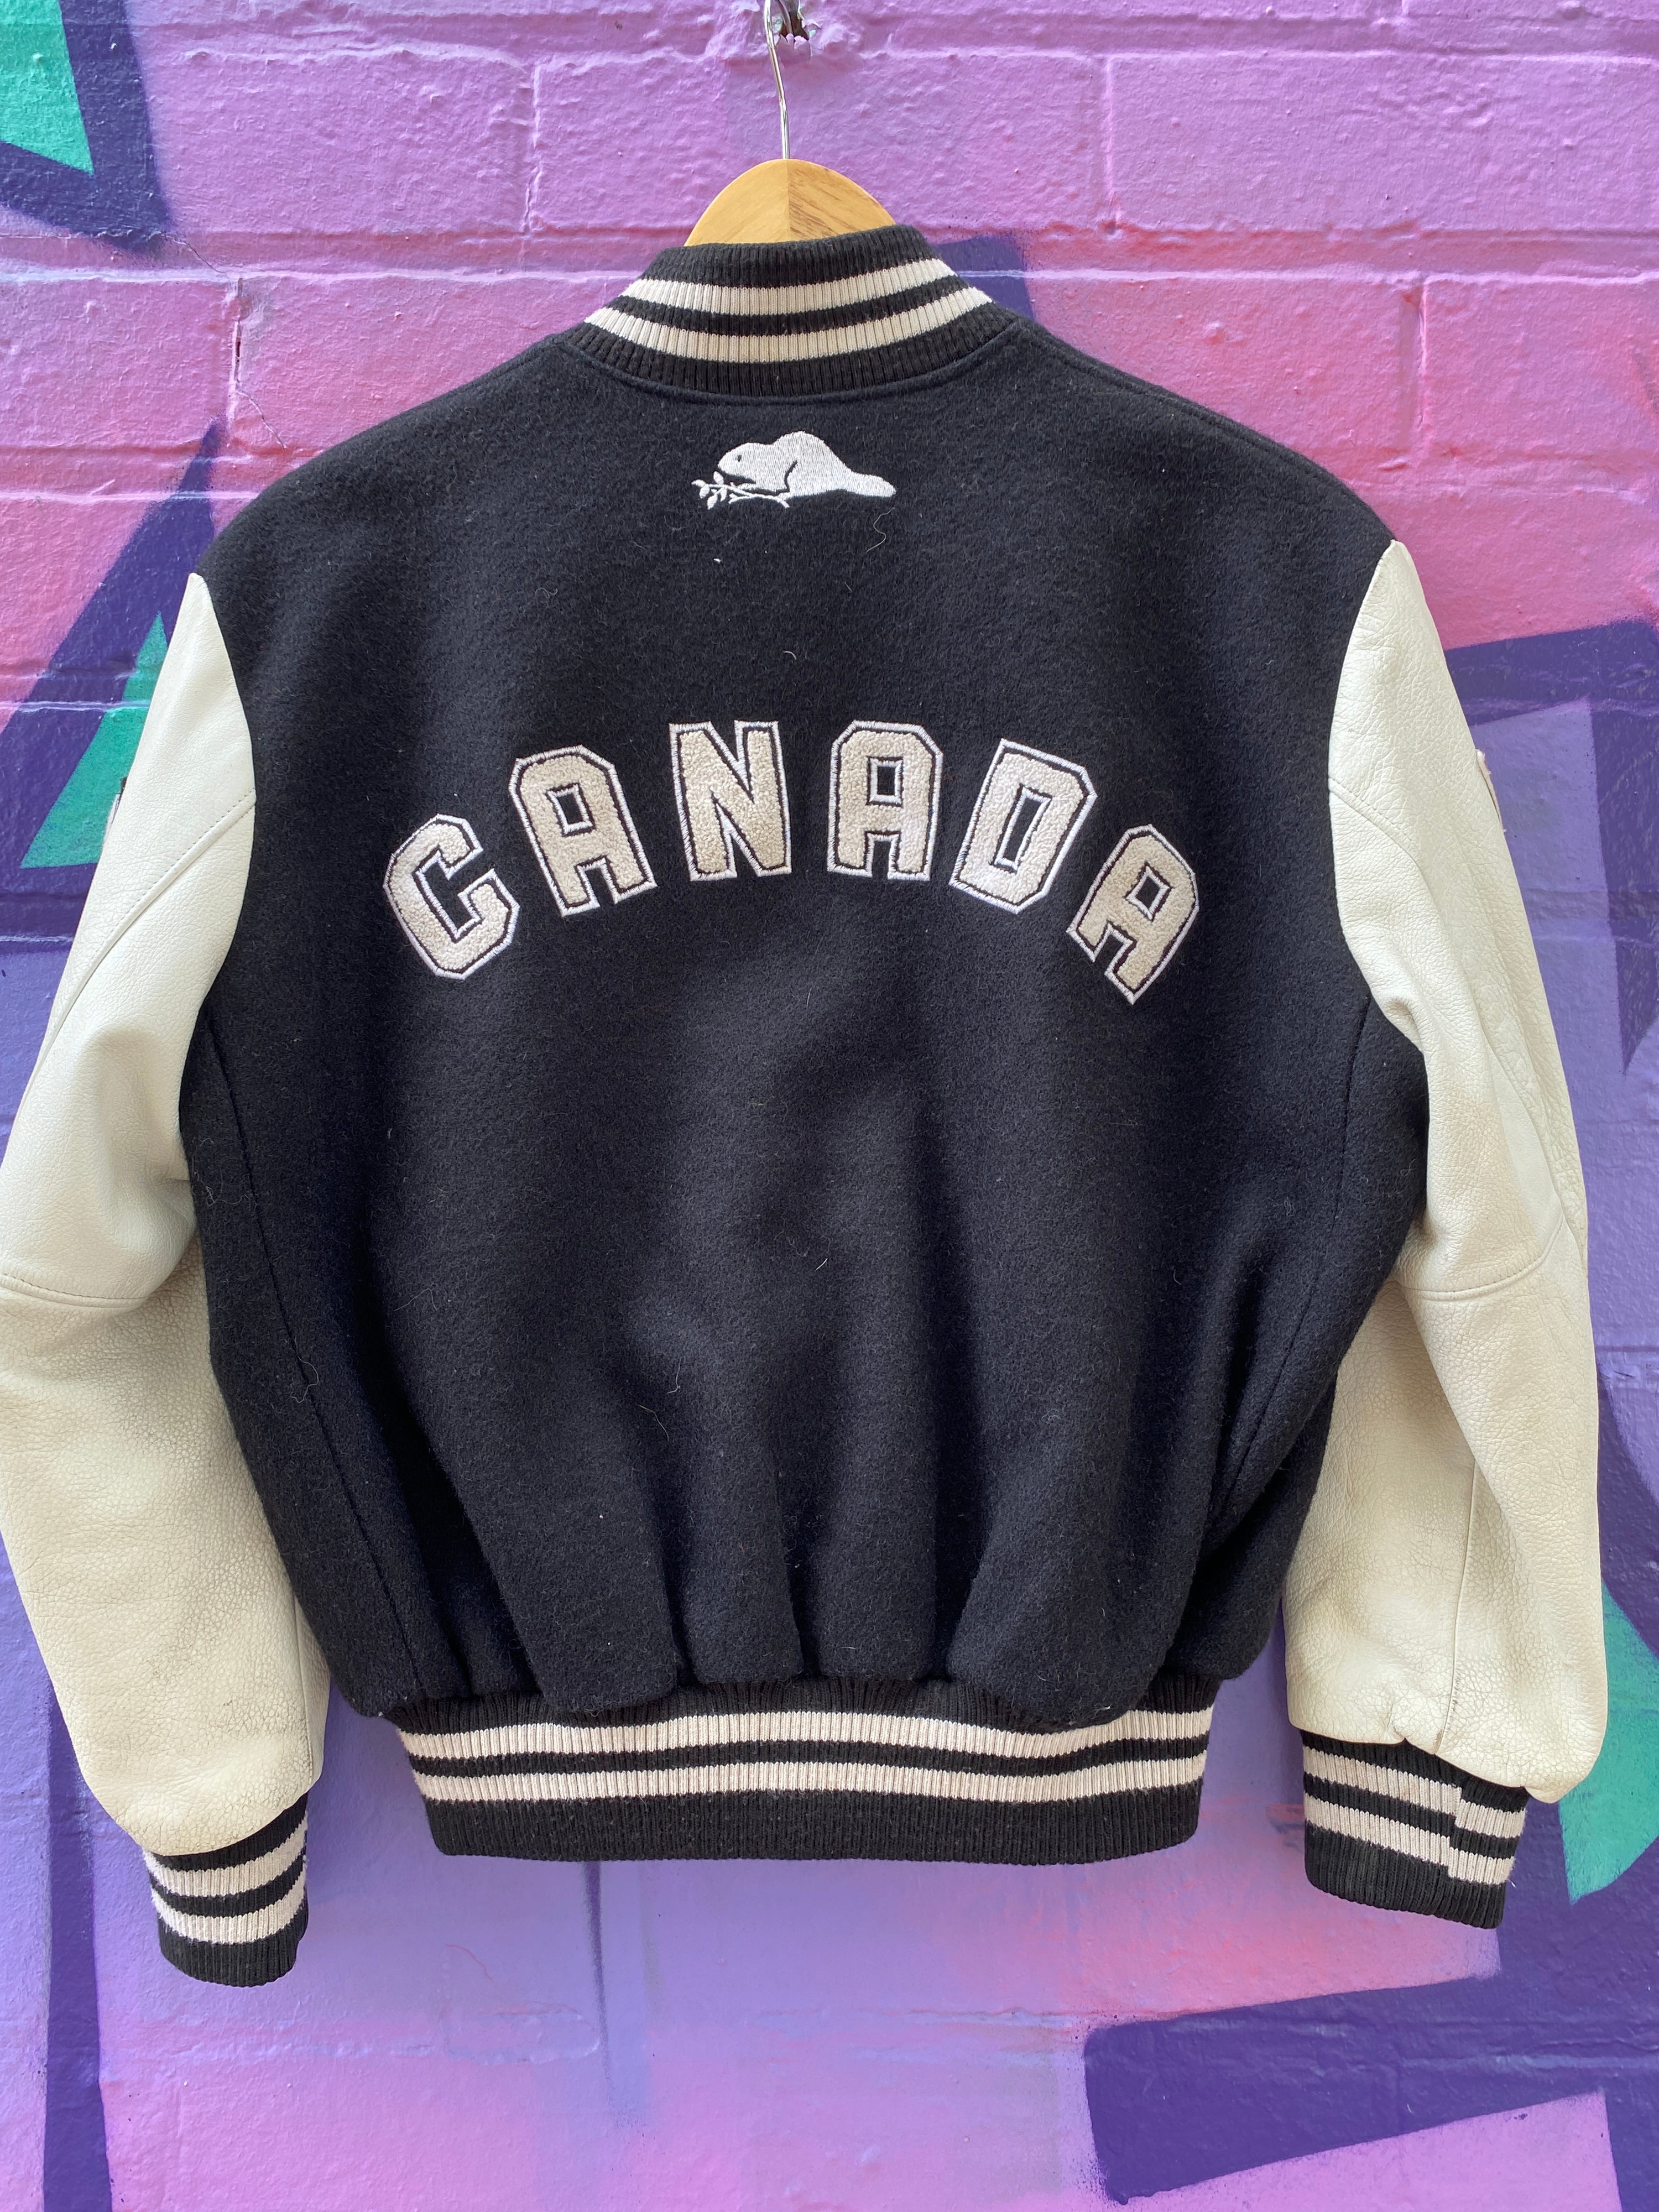 S - Vintage Roots Athletics 'Canada' Varsity Jacket